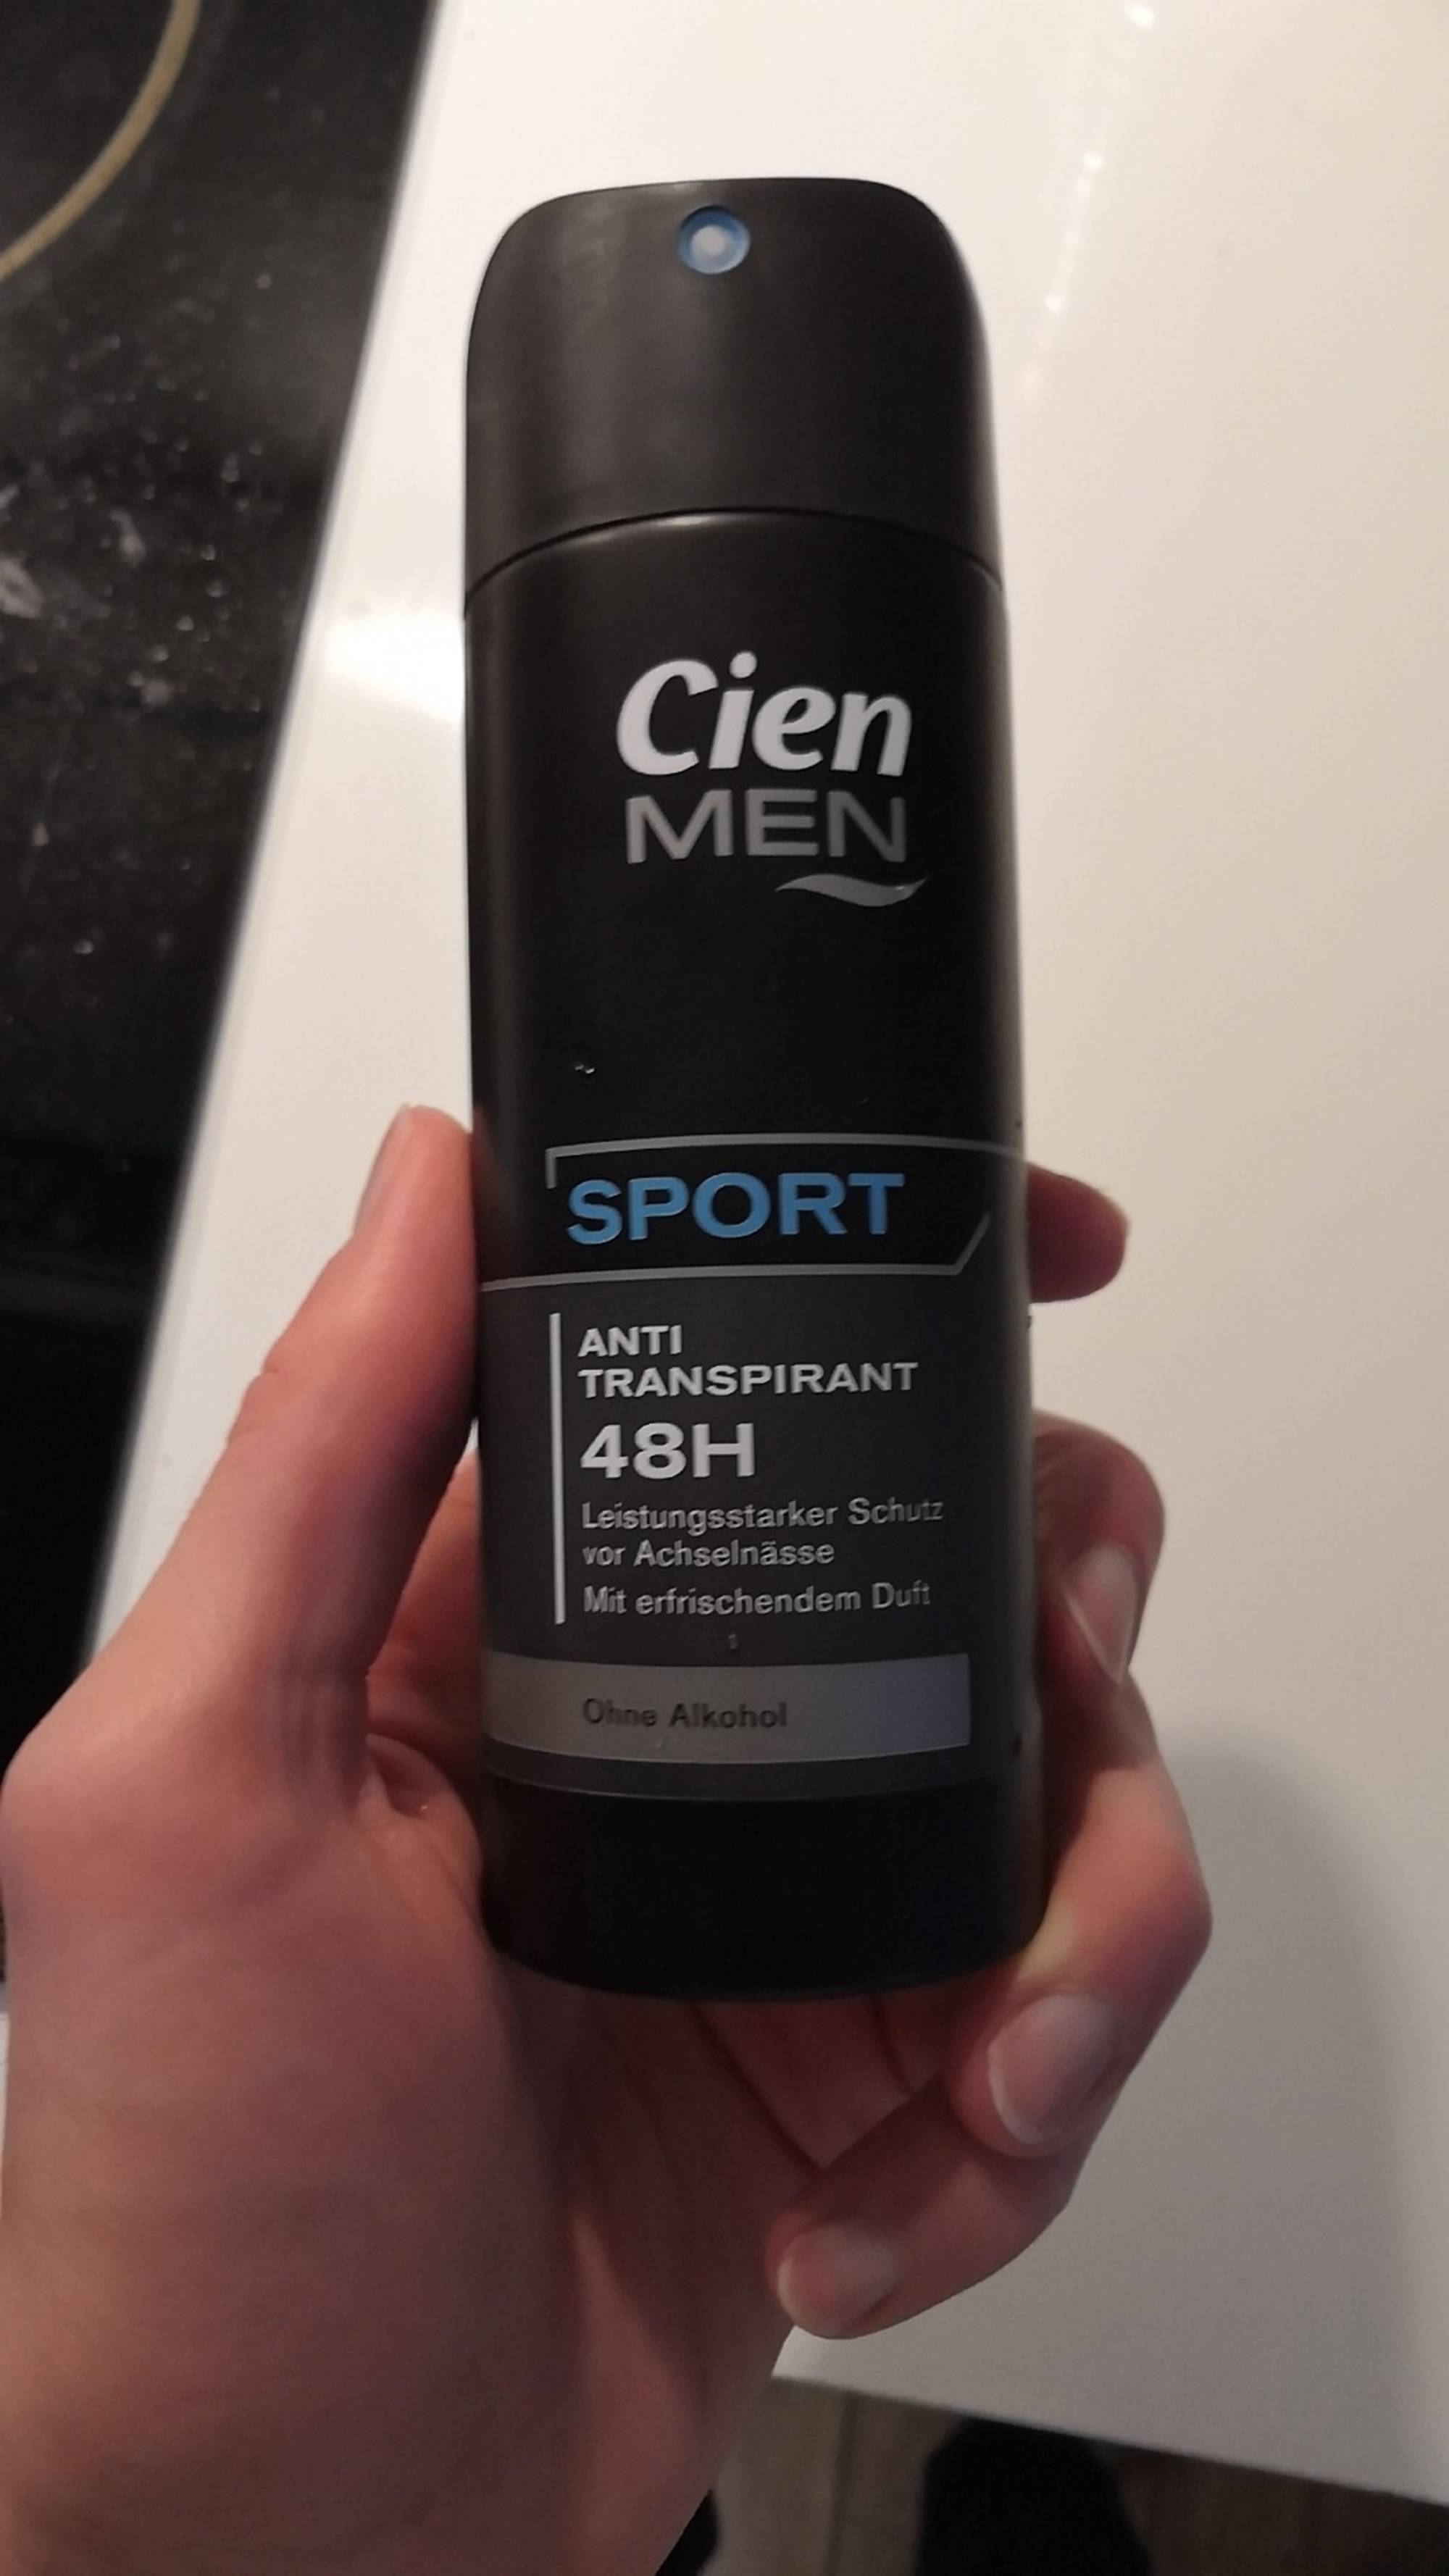 LIDL - Cien men - Anti-transpirant sport 48h